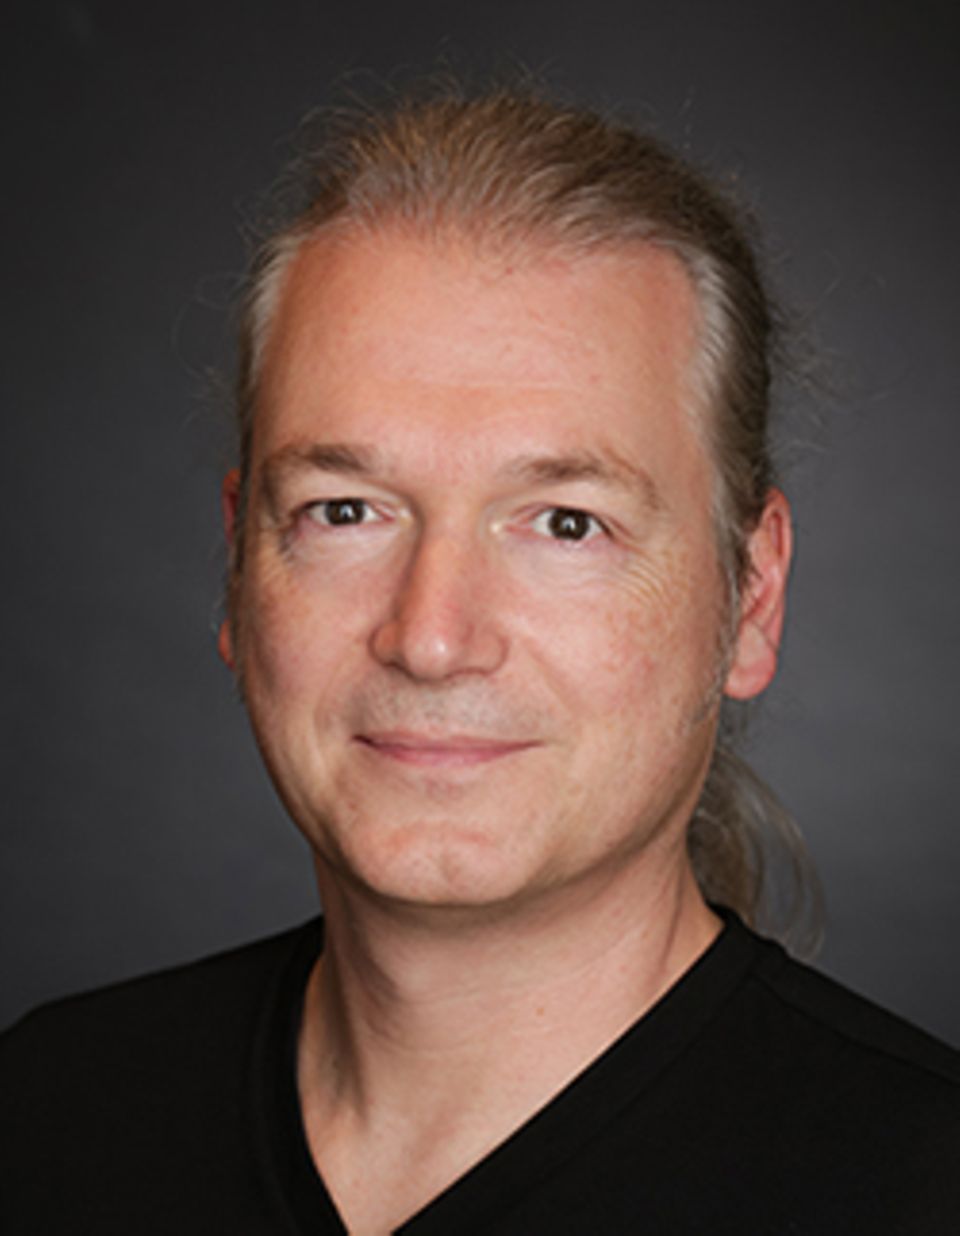 Umweltpsychologe Marcel Hunecke